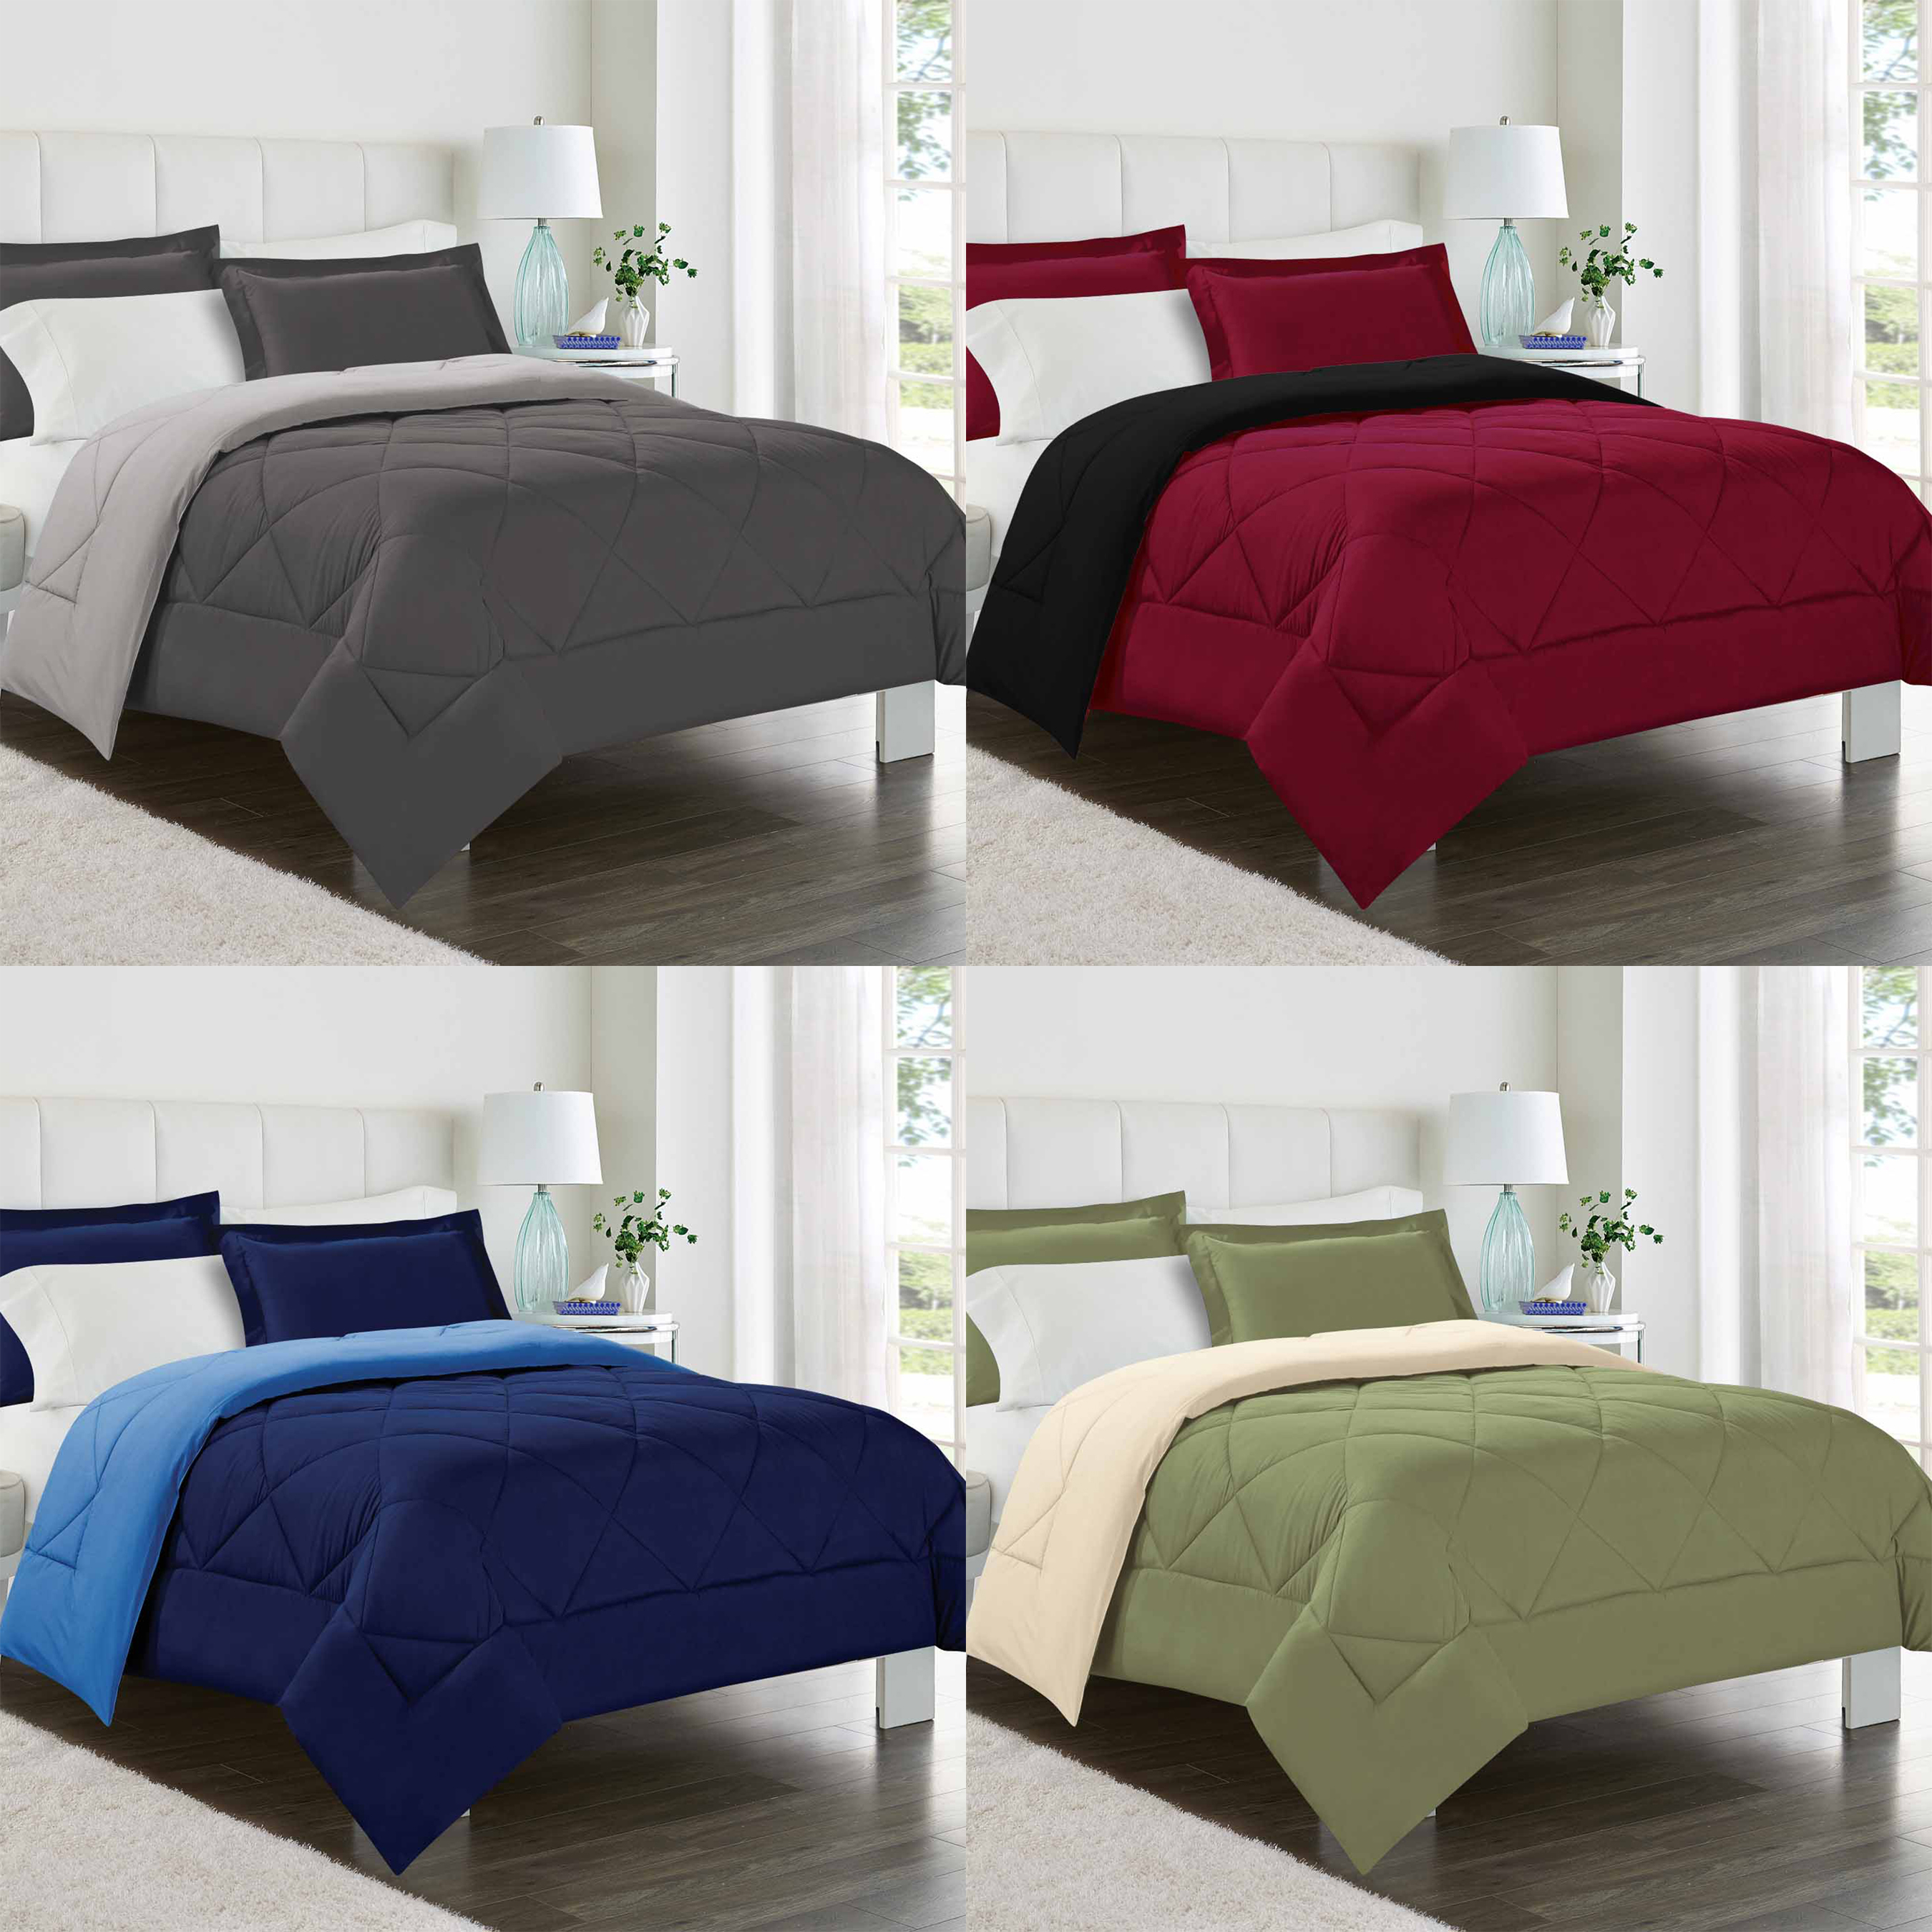 Modern 3pc Reversible Comforter Set - Assorted Colors - Twin, Burgundy/black